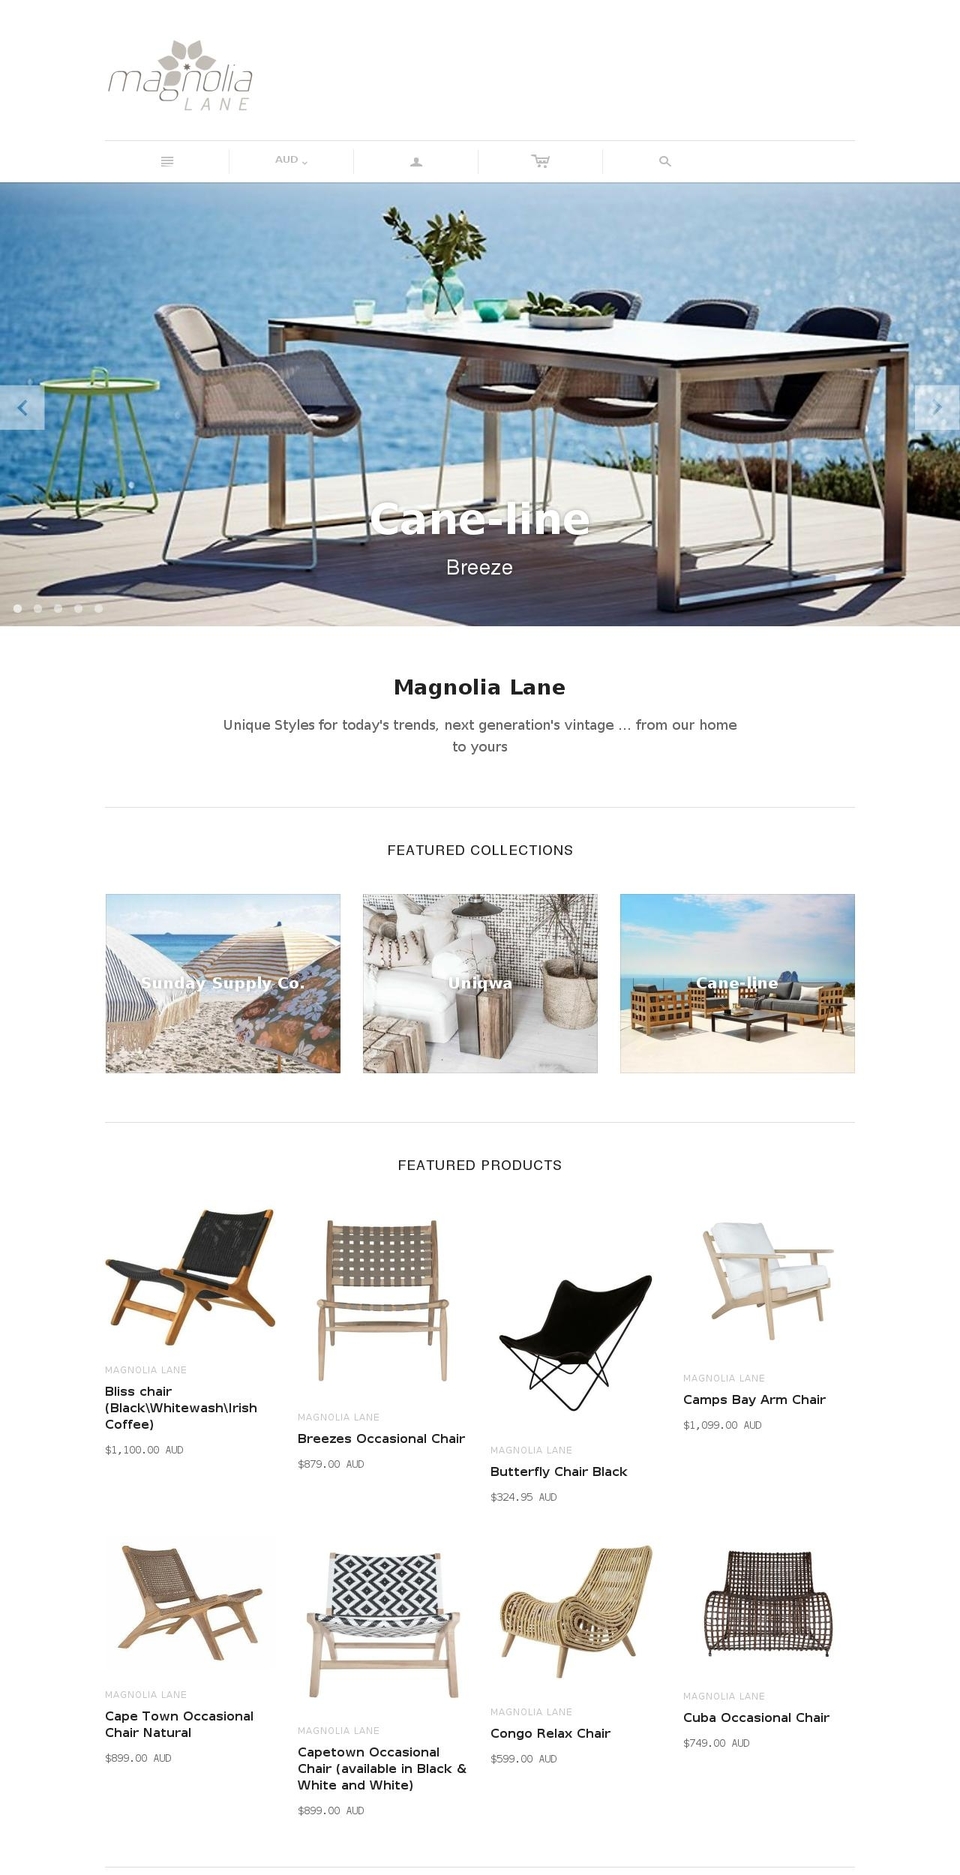 magnolialane.biz shopify website screenshot